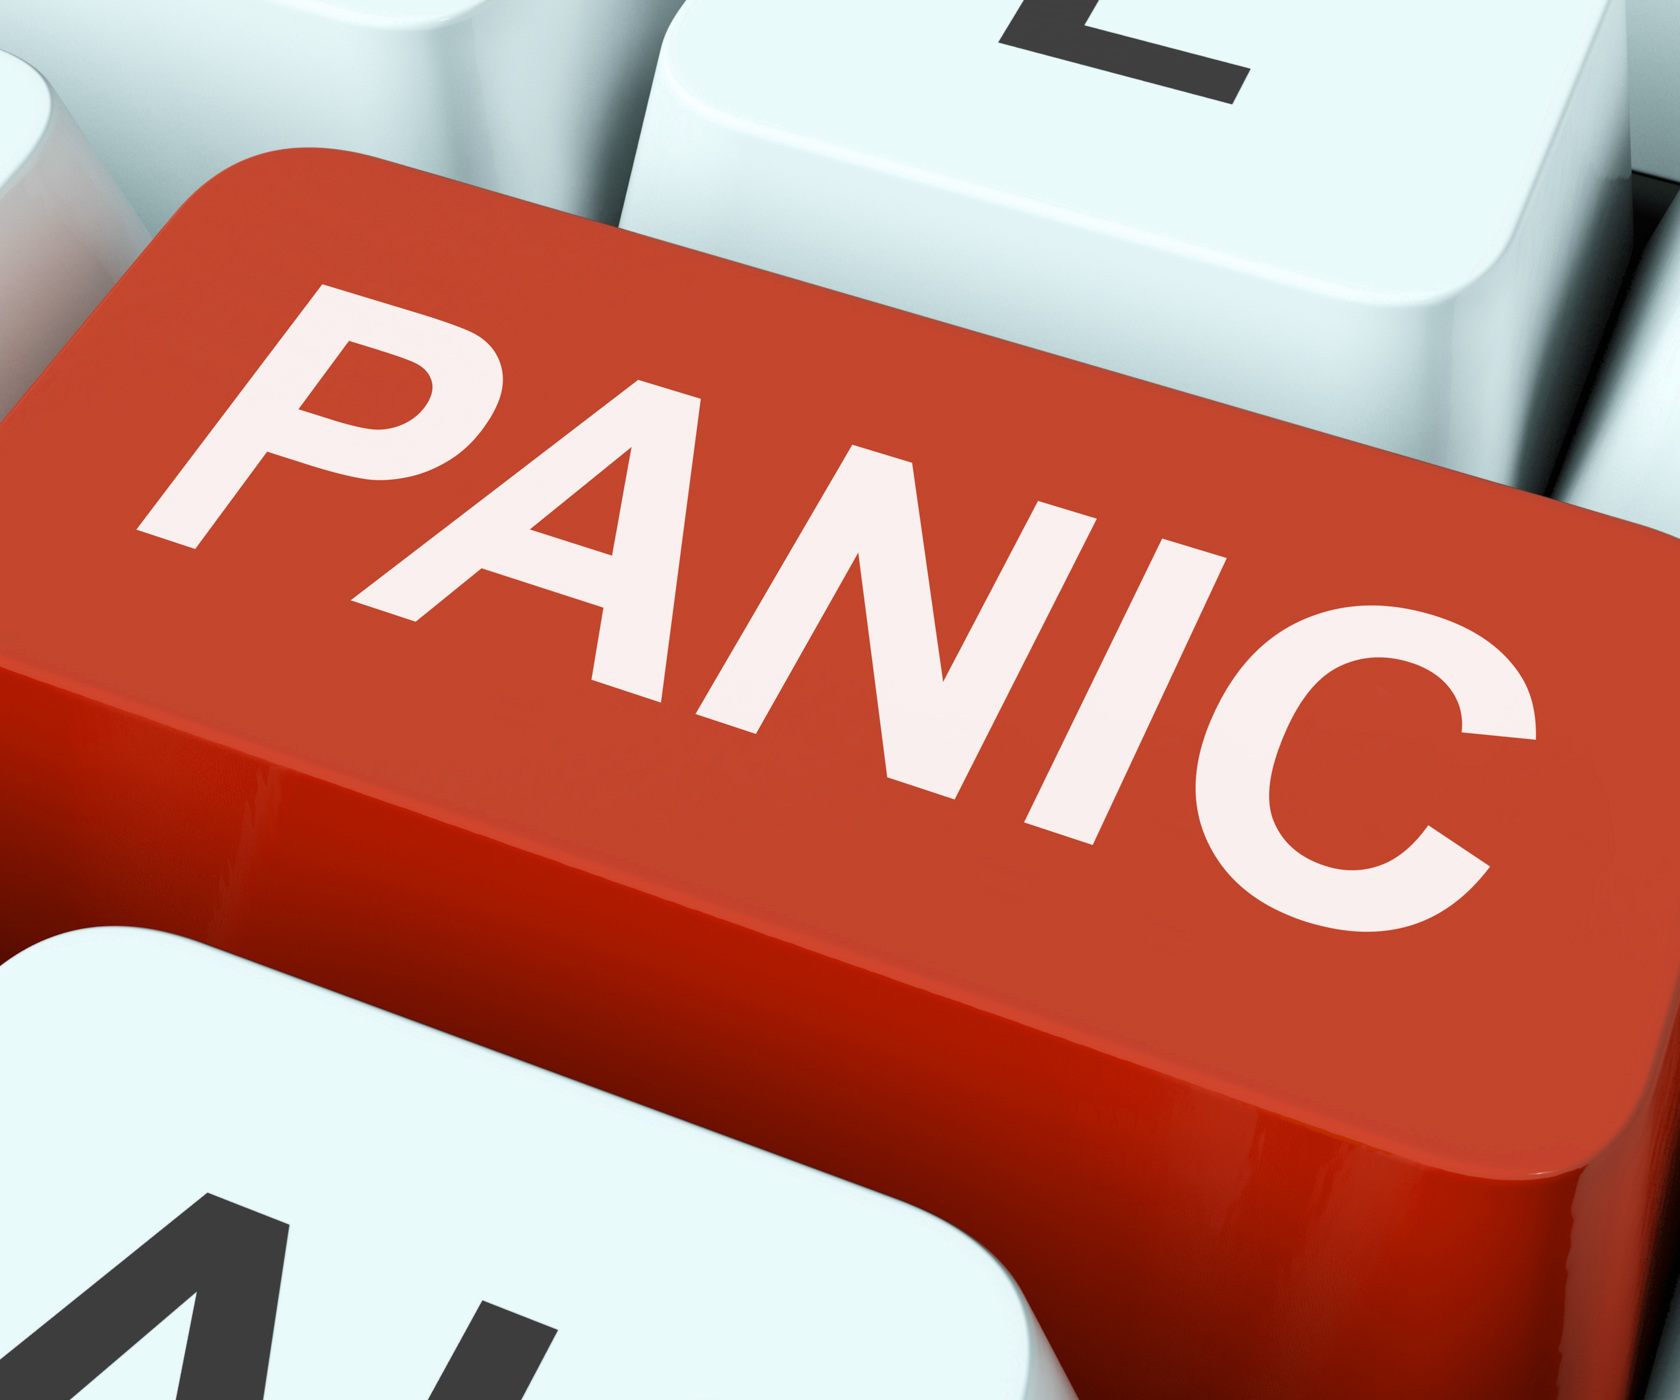 Panic key shows panicky terror or distress photo